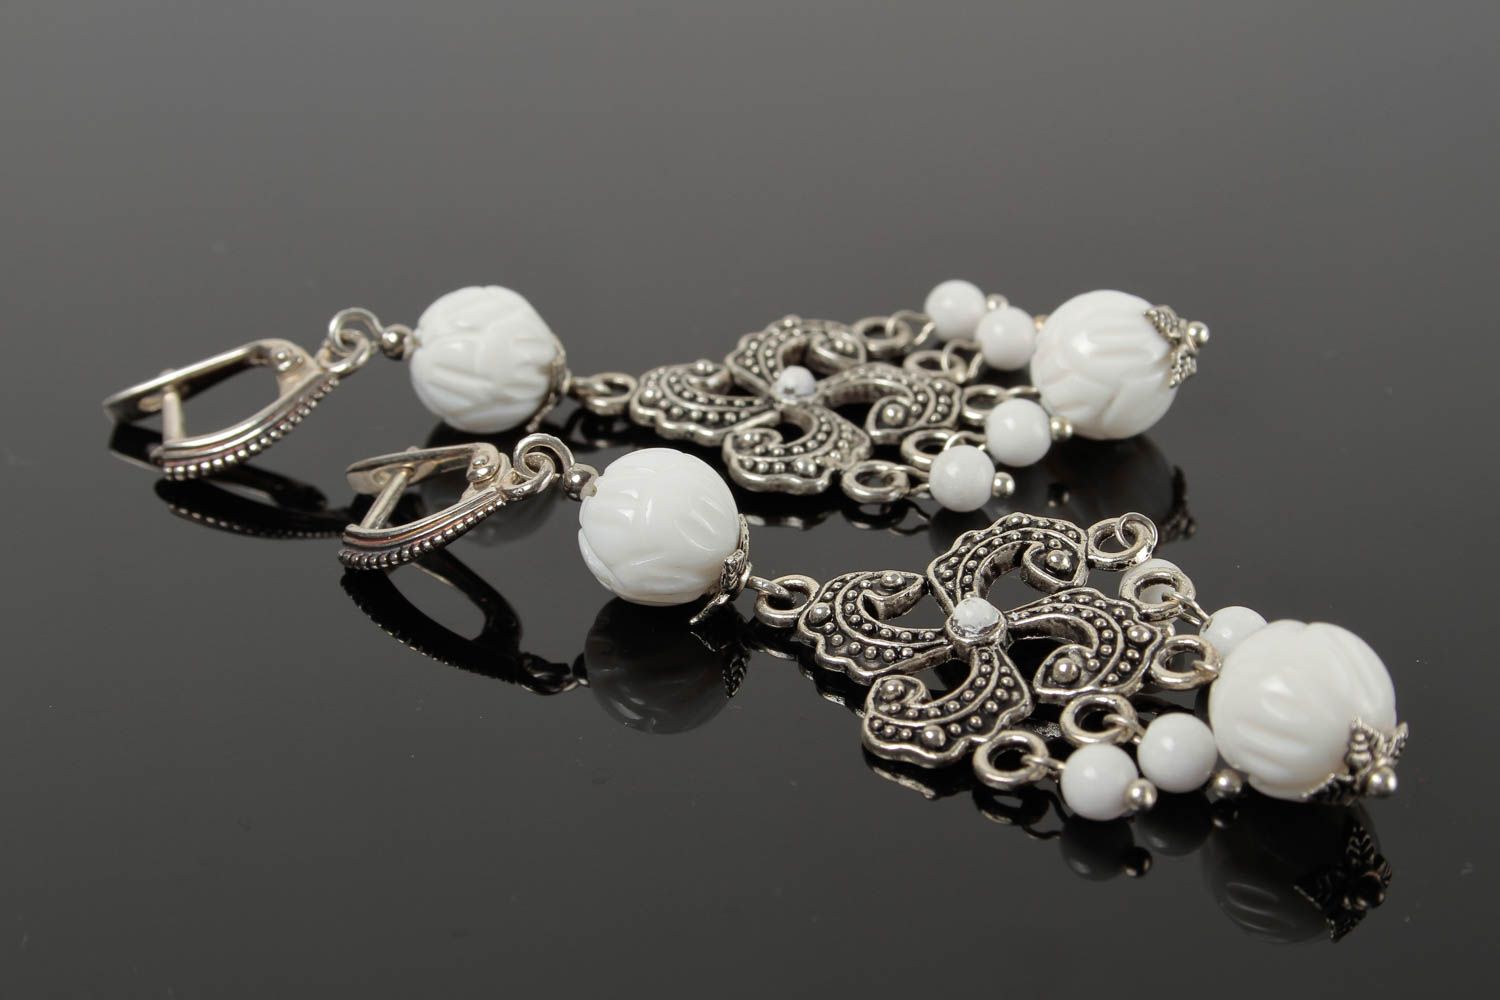 Handmade earrings with natural stone elegant evening earrings designer jewelry photo 2